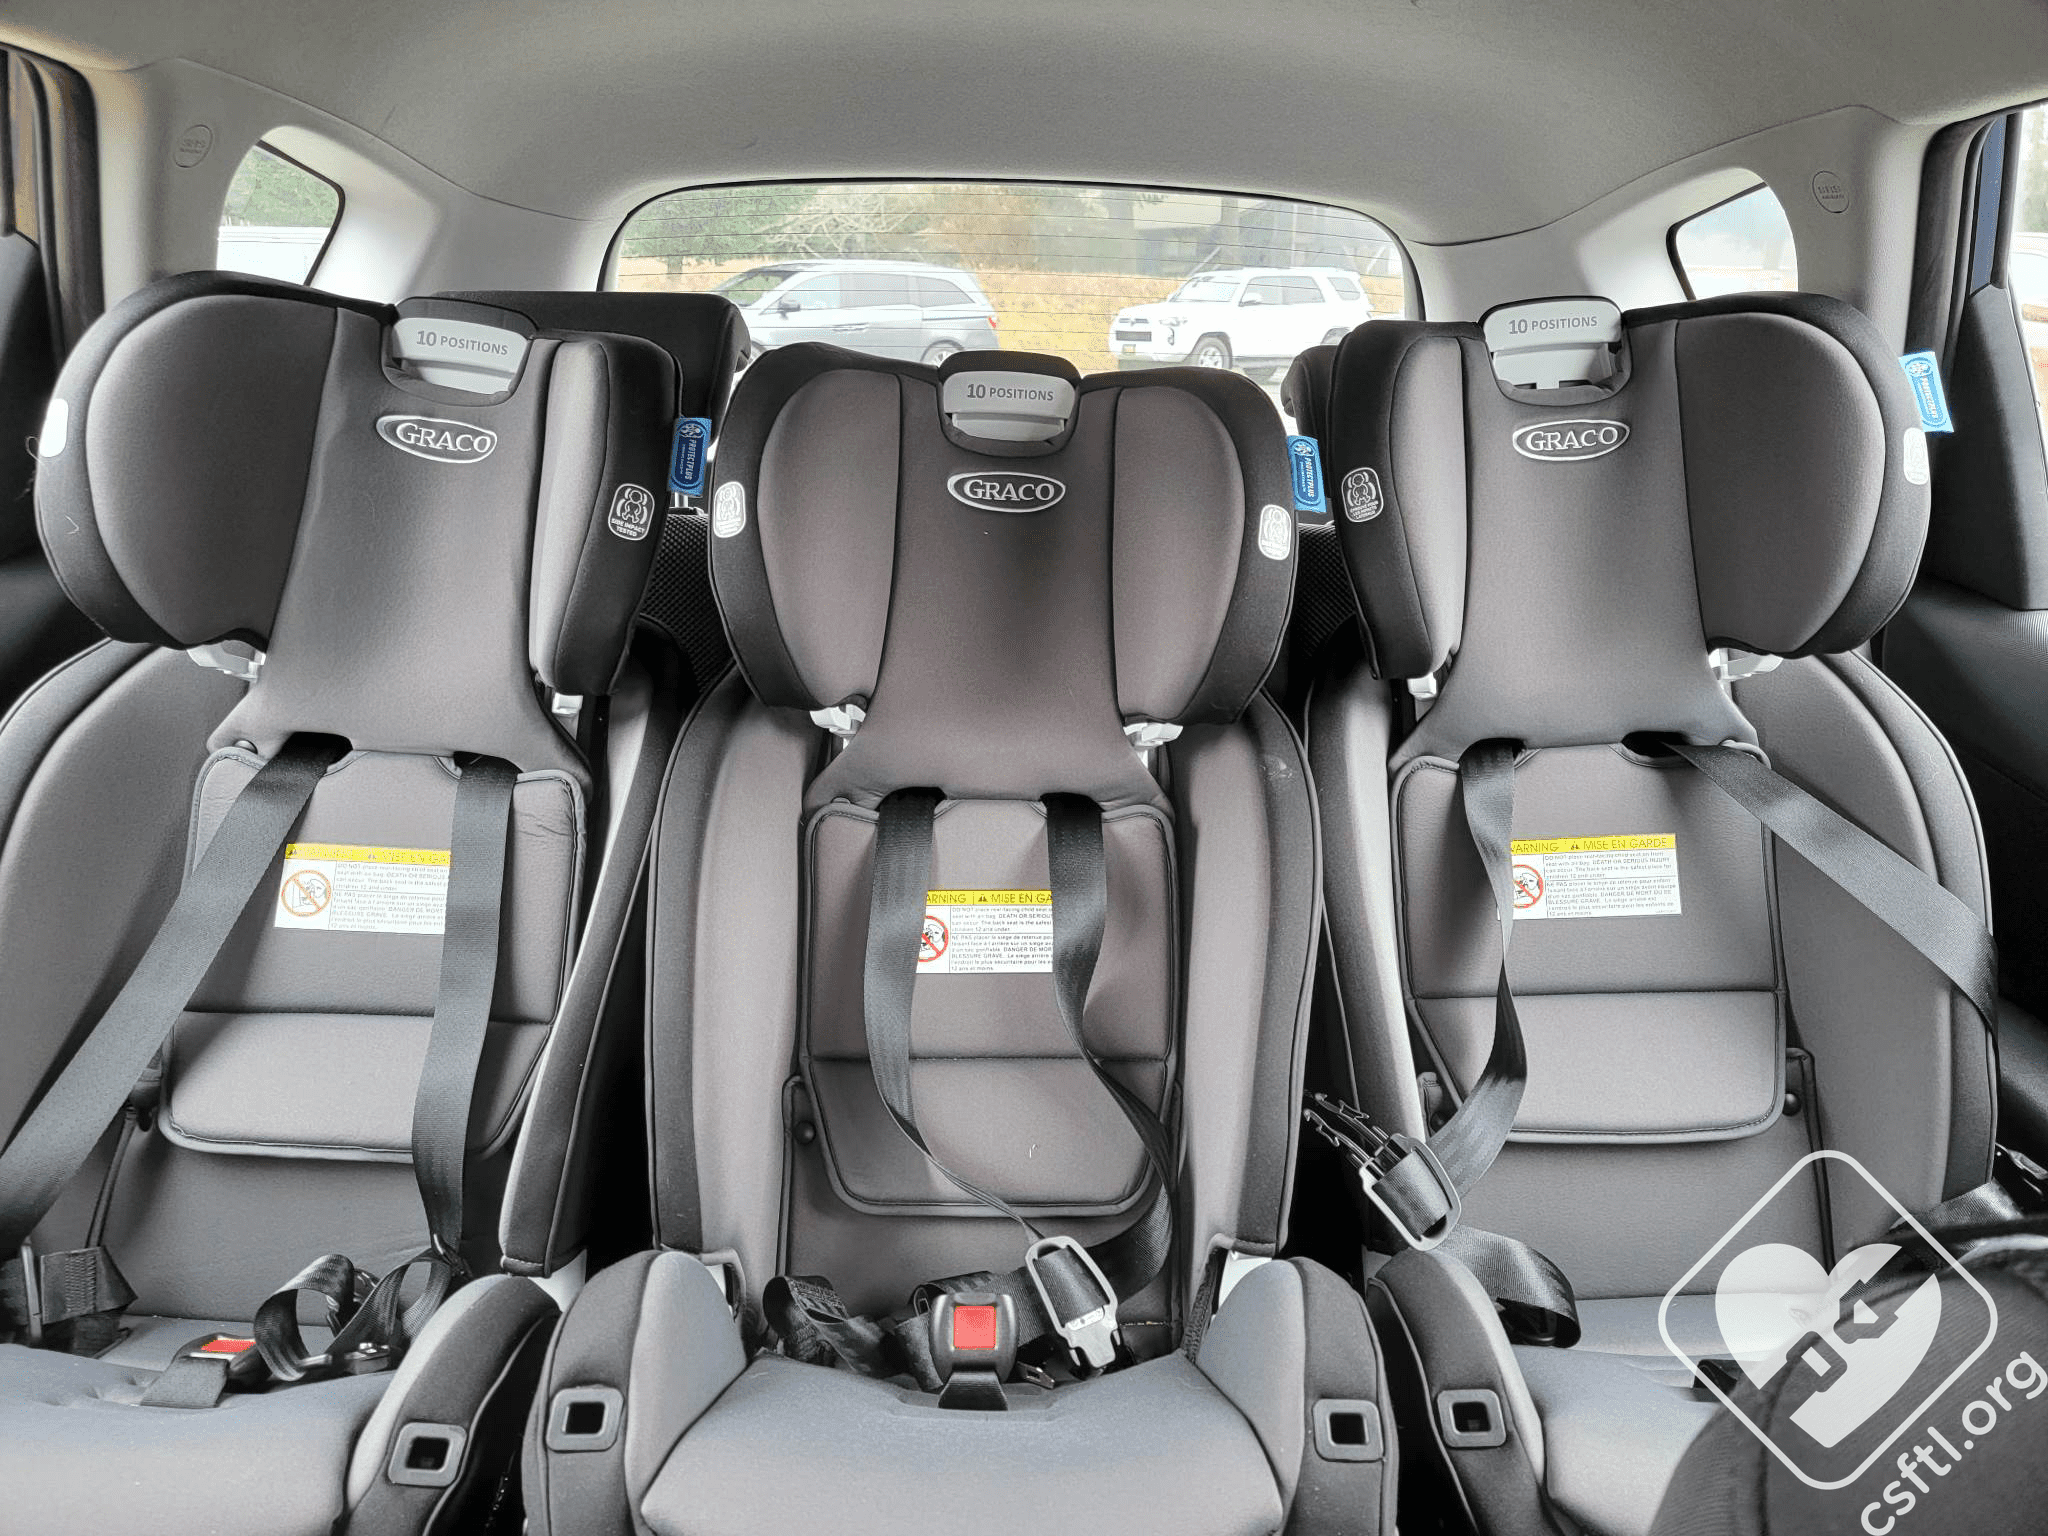 Graco - SlimFit3 LX 3-in-1 Car Seat, Katrina